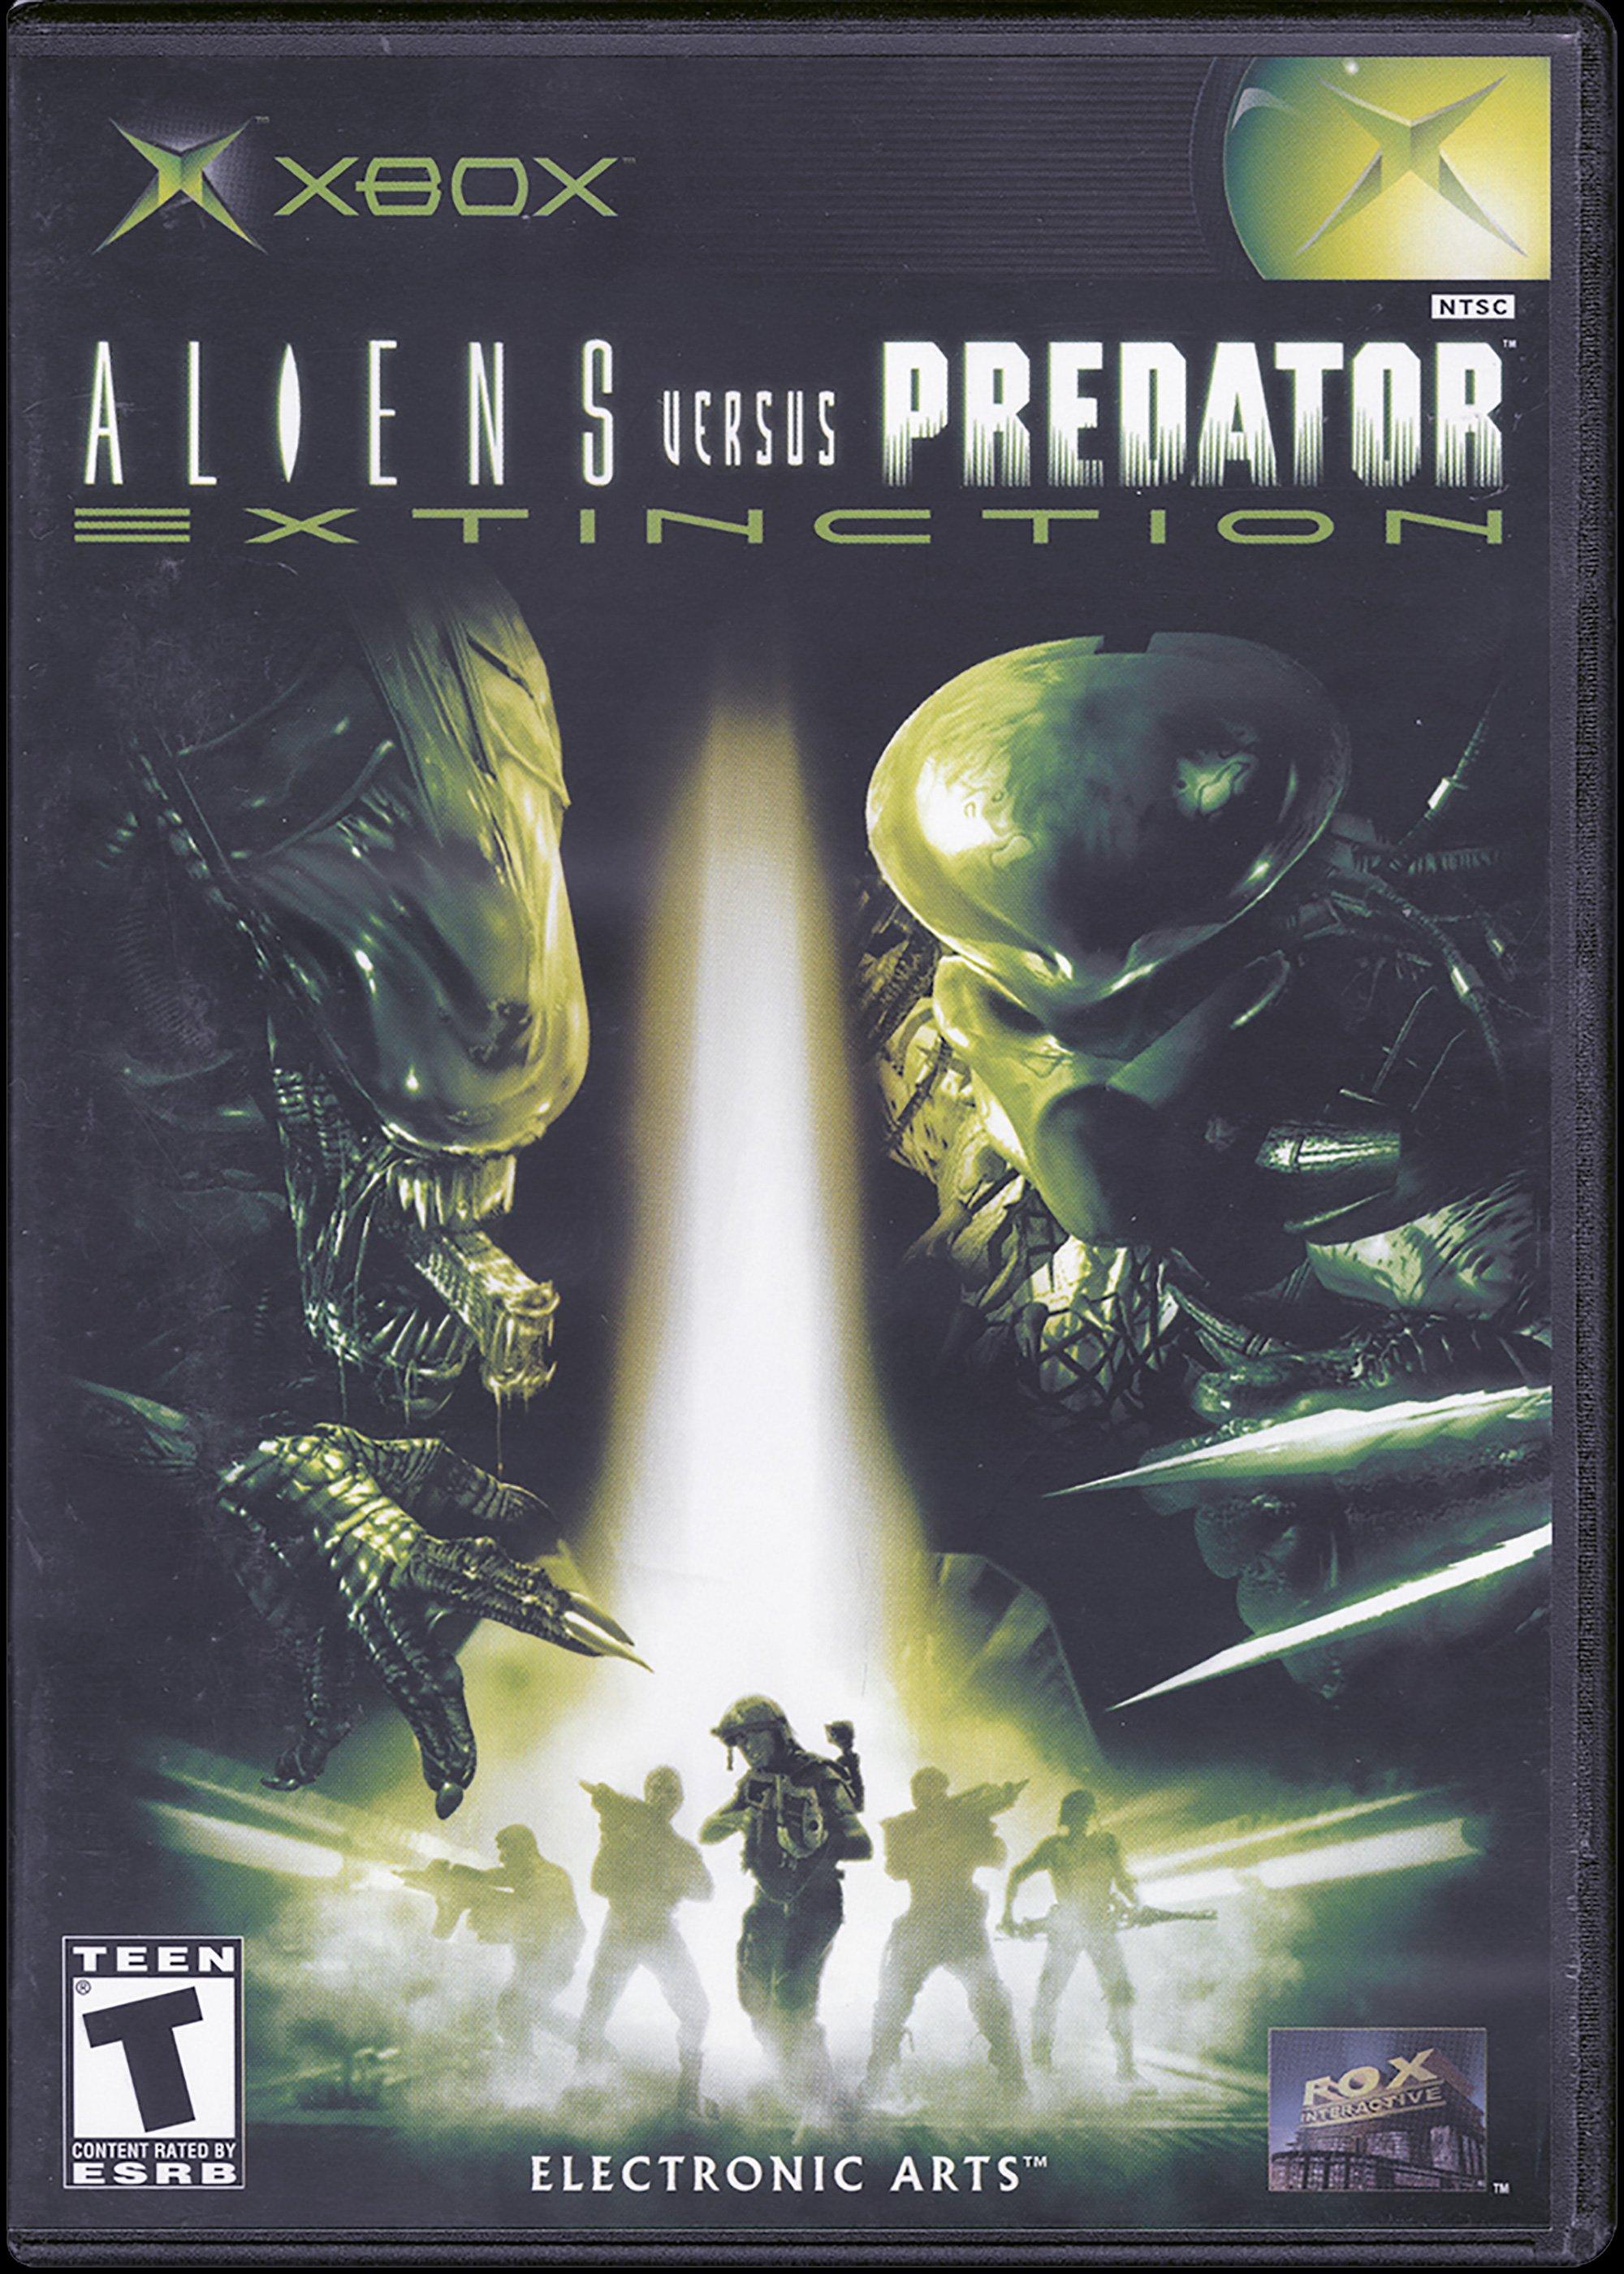 Aliens vs Predator Extinction 2